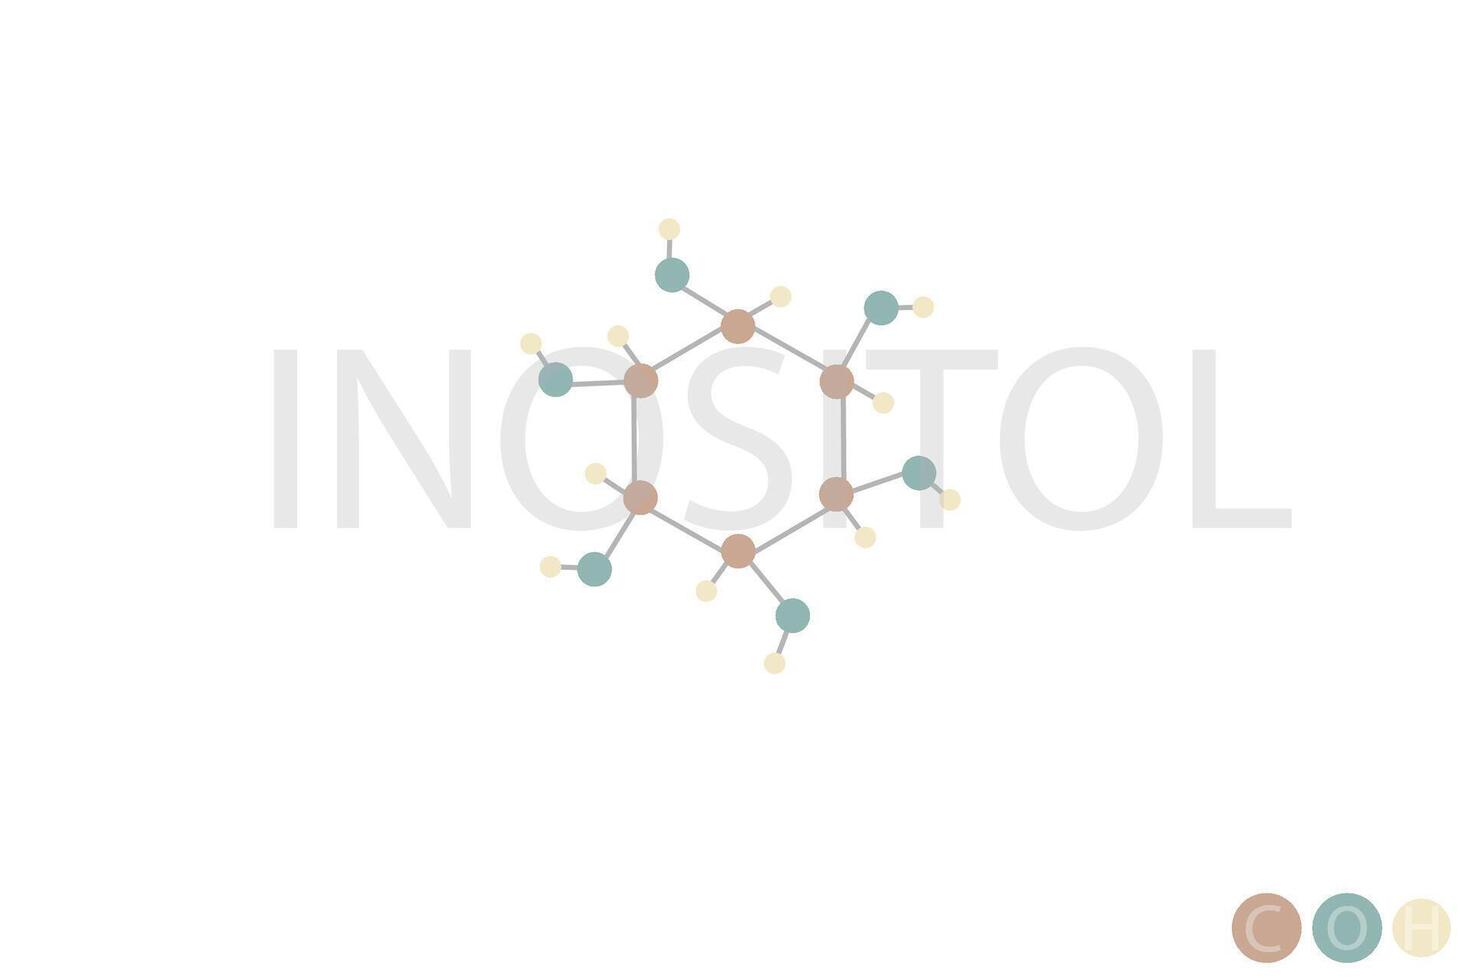 Inosit molekular Skelett- chemisch Formel vektor